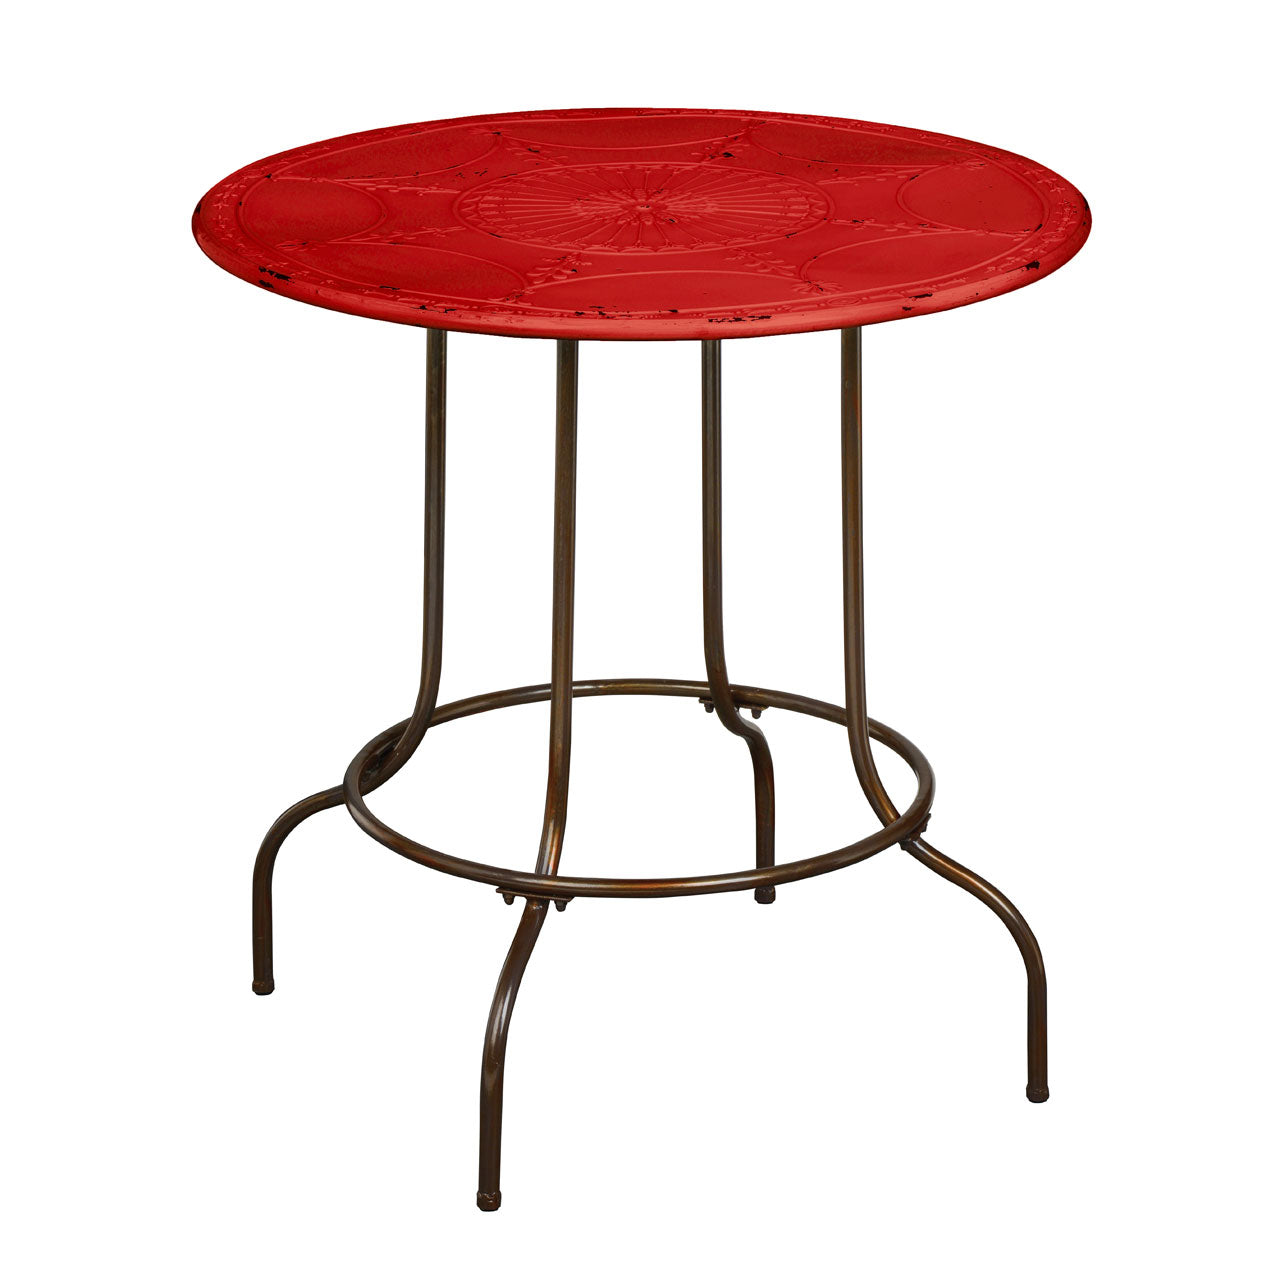 Artinova Red Round Metal Table